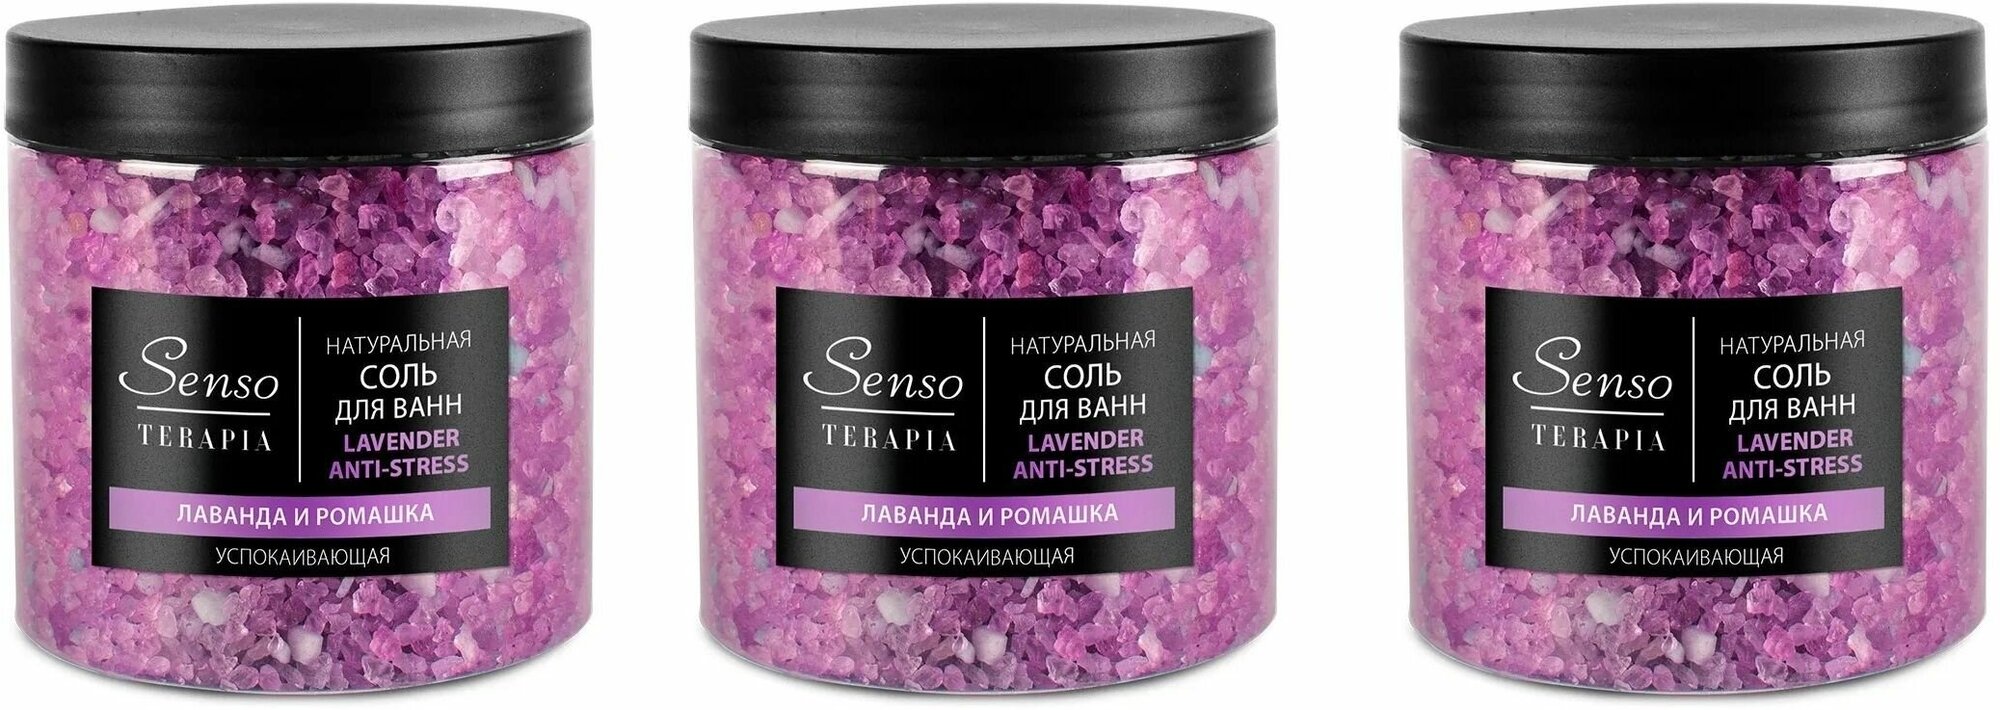 Соль для ванн Senso Terapia Lavender Anti-stress, Успокаивающая, 560г х 3шт